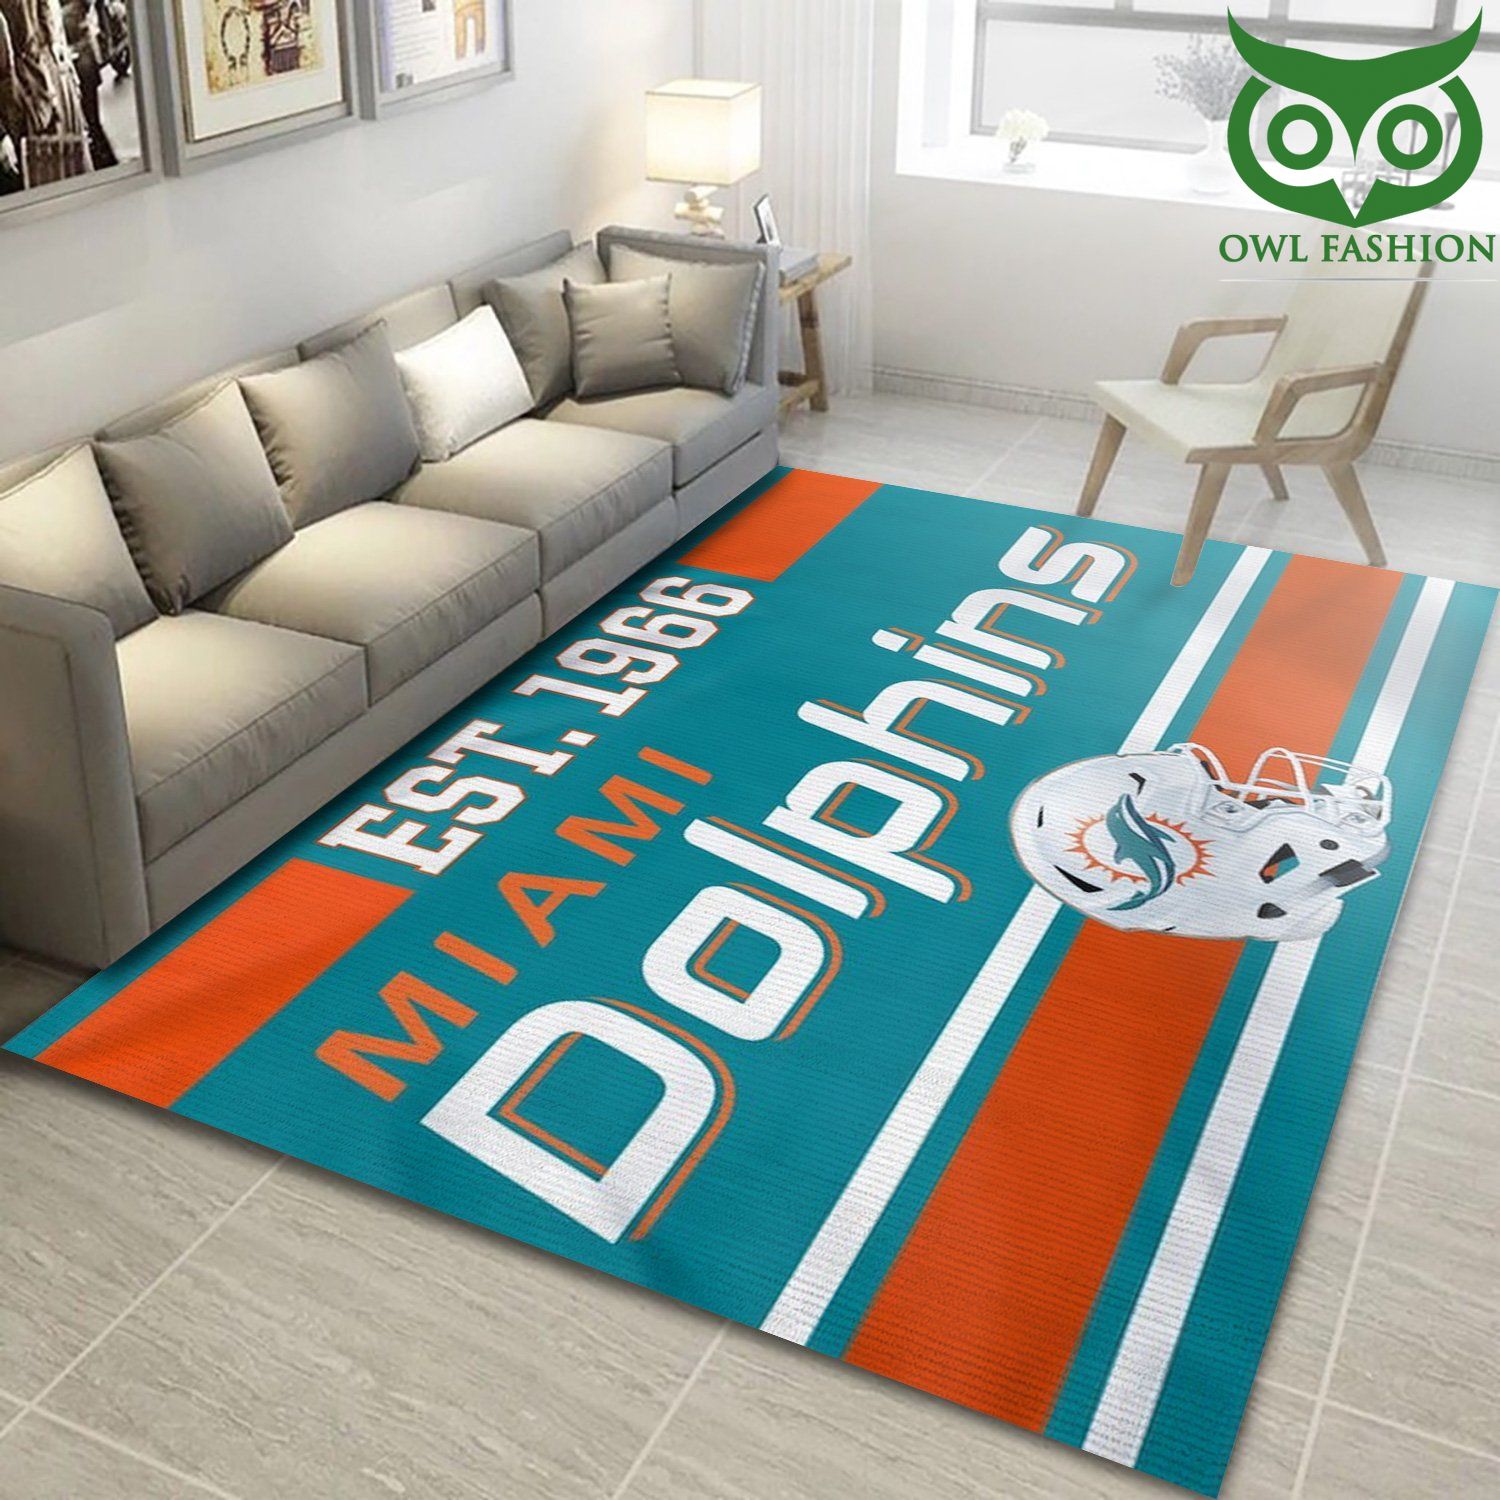 SPECIAL Miami Dolphins NFL home decoration carpet rug